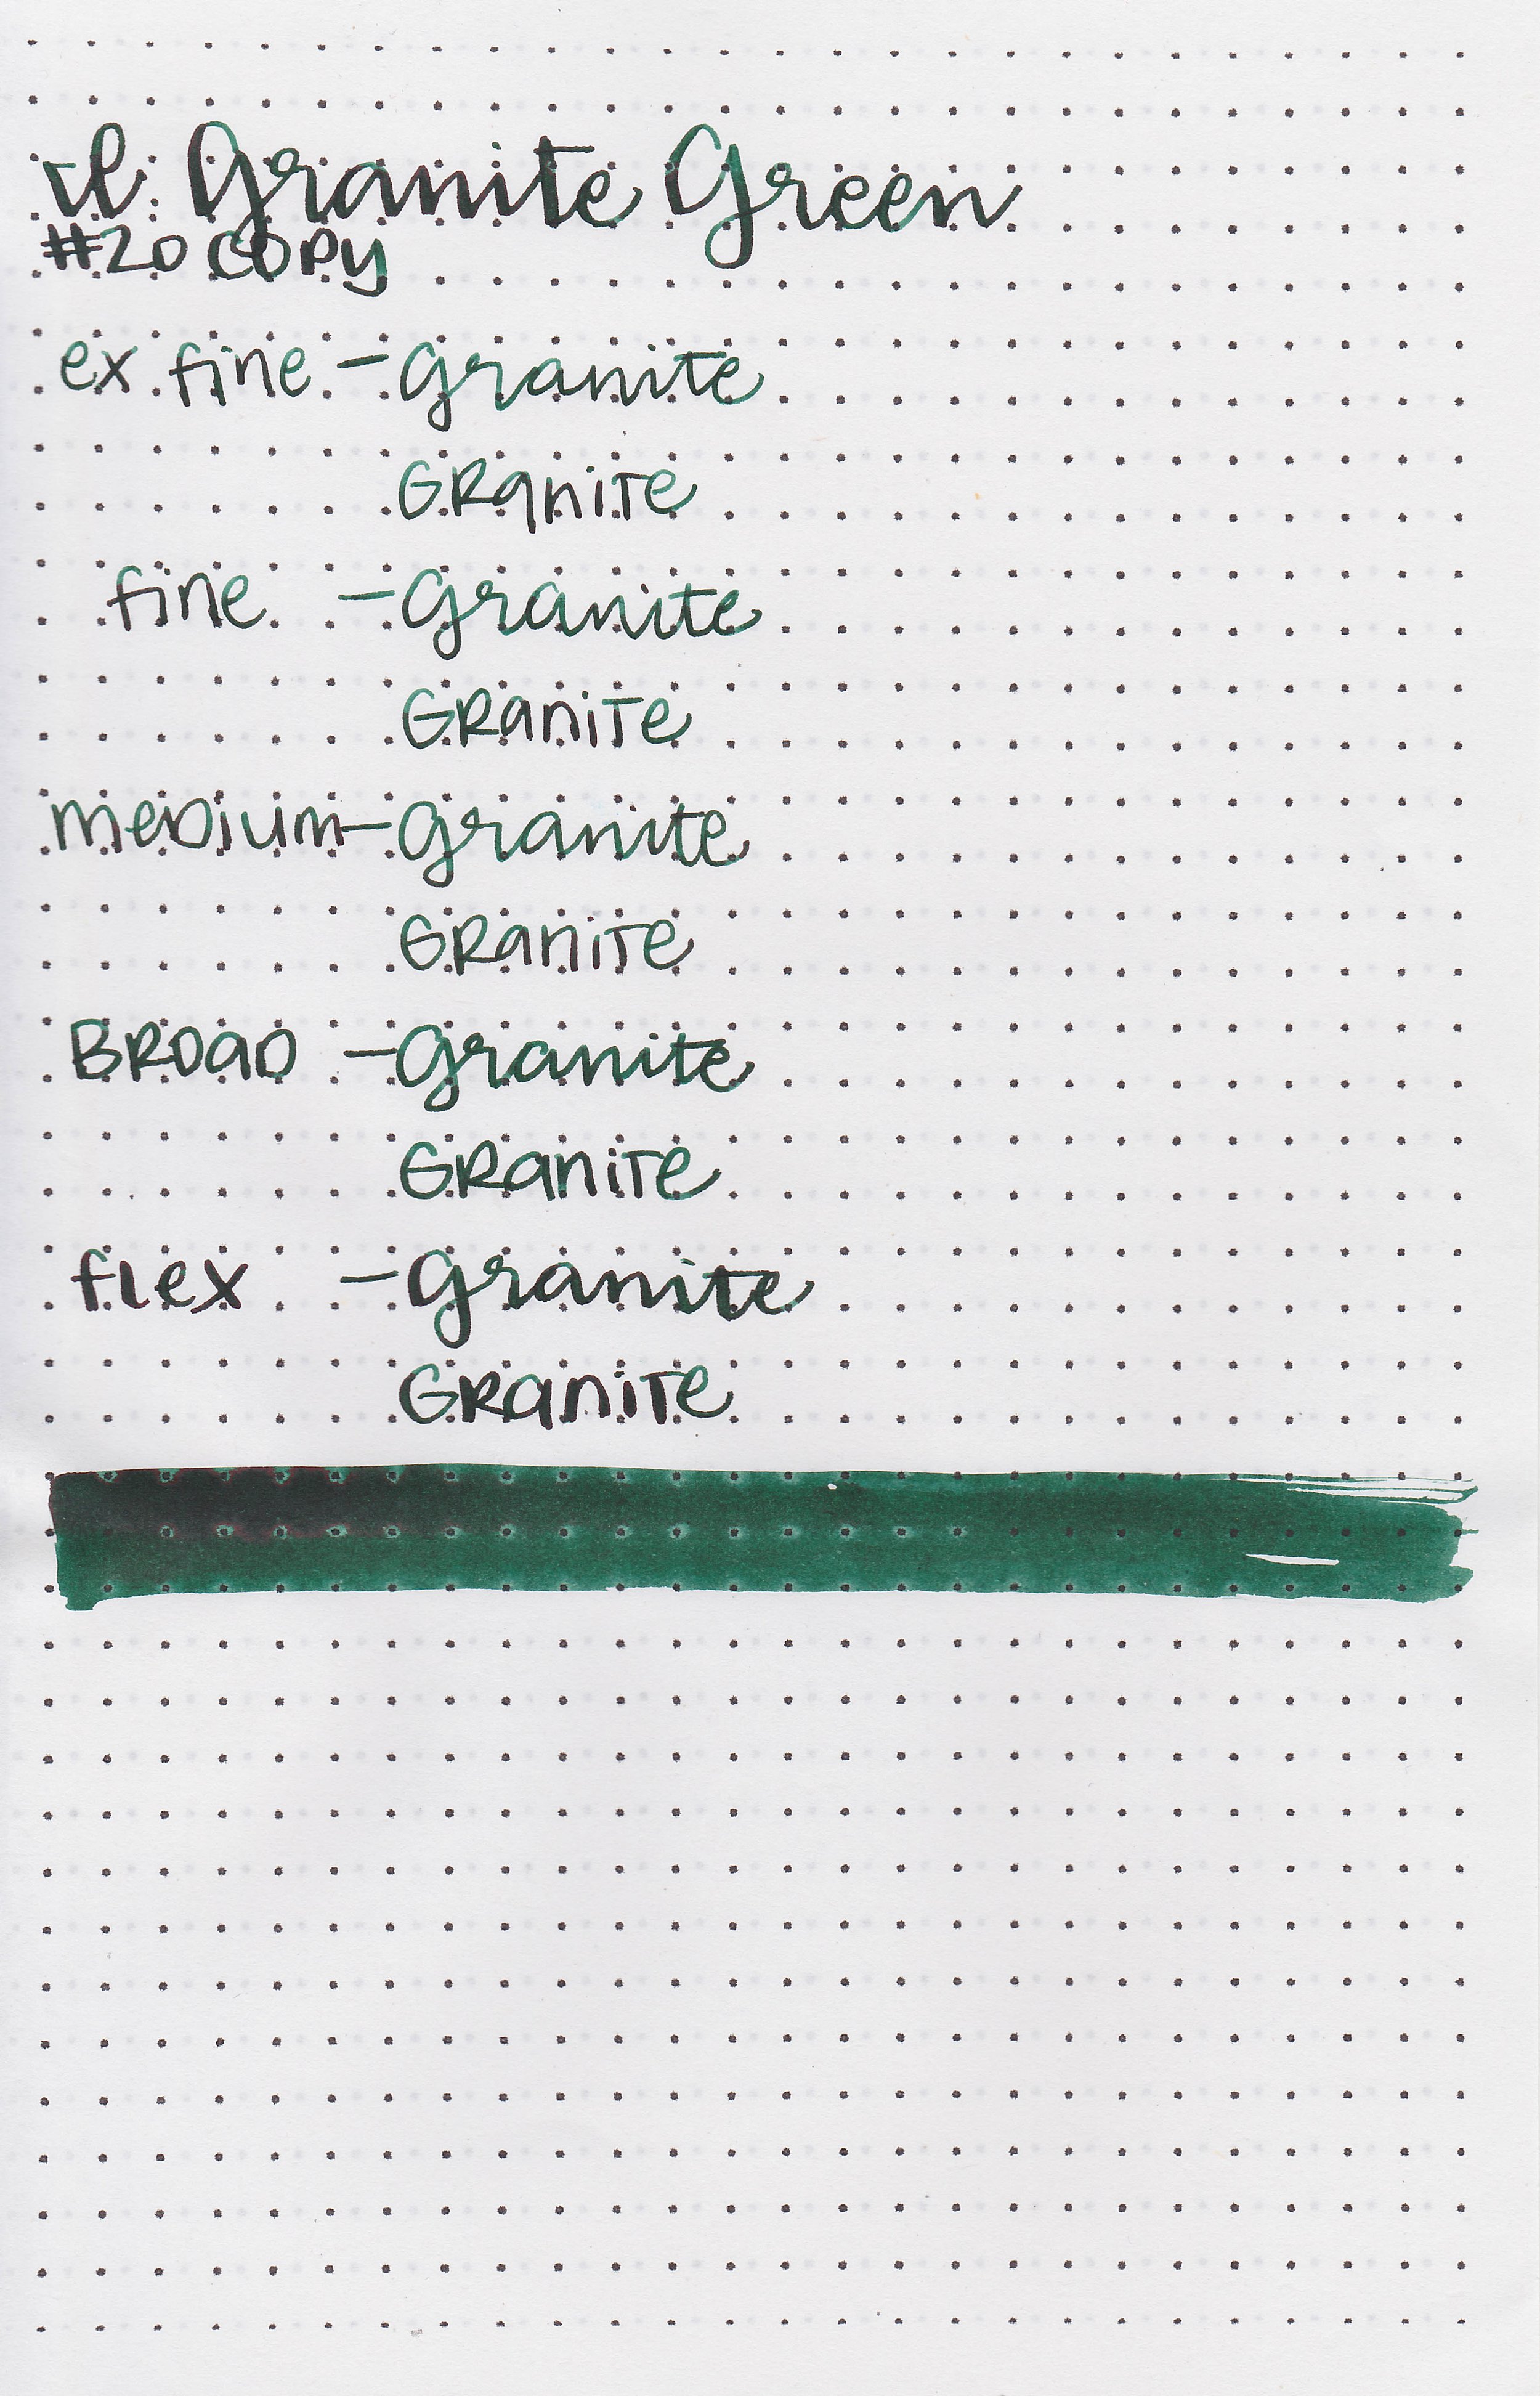 ink-granite-green-11.jpg